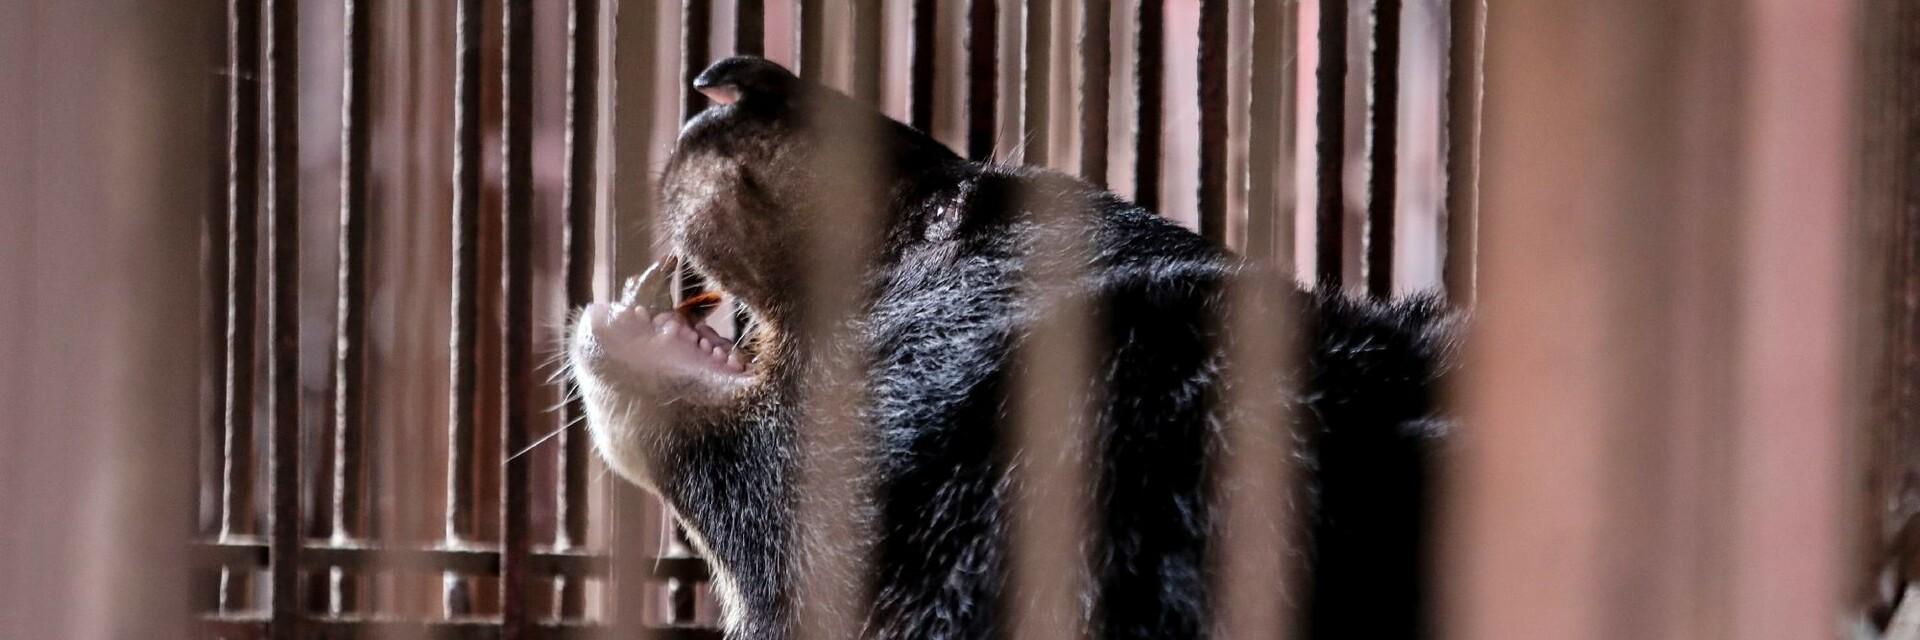 Bears in Vietnam